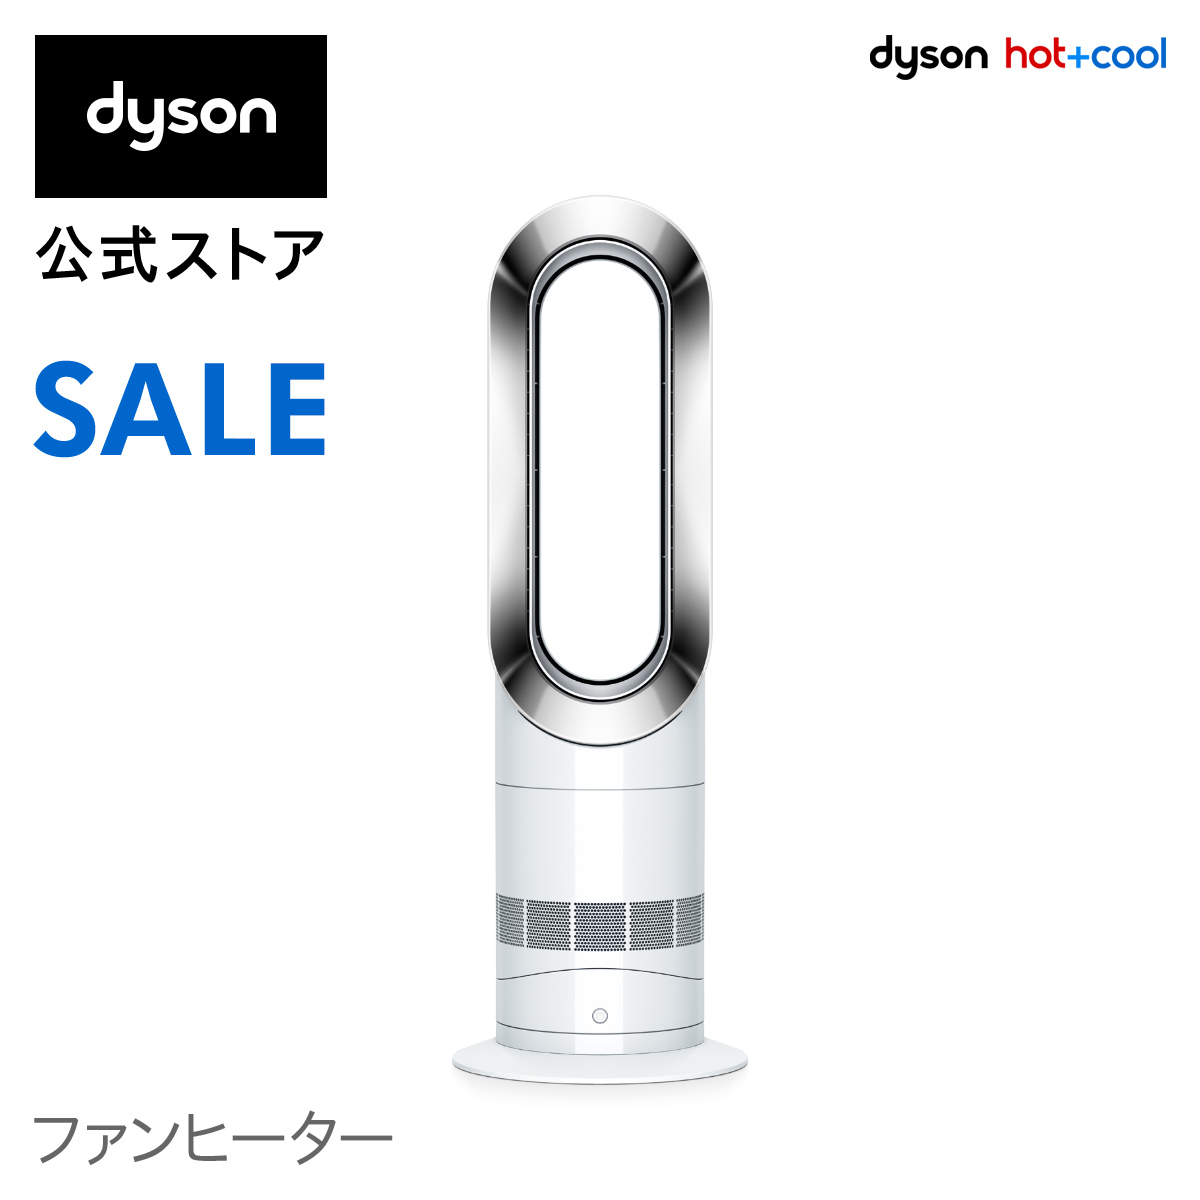 Dyson ダイソン ホットアンドクール dyson ヒーター 扇風機 暖房 AM09 WN 期間限定価格 ホワイト AM09WN 30%OFF 22日23:59まで Hot+Cool ファンヒーター 大好評です ニッケル 後払い手数料無料